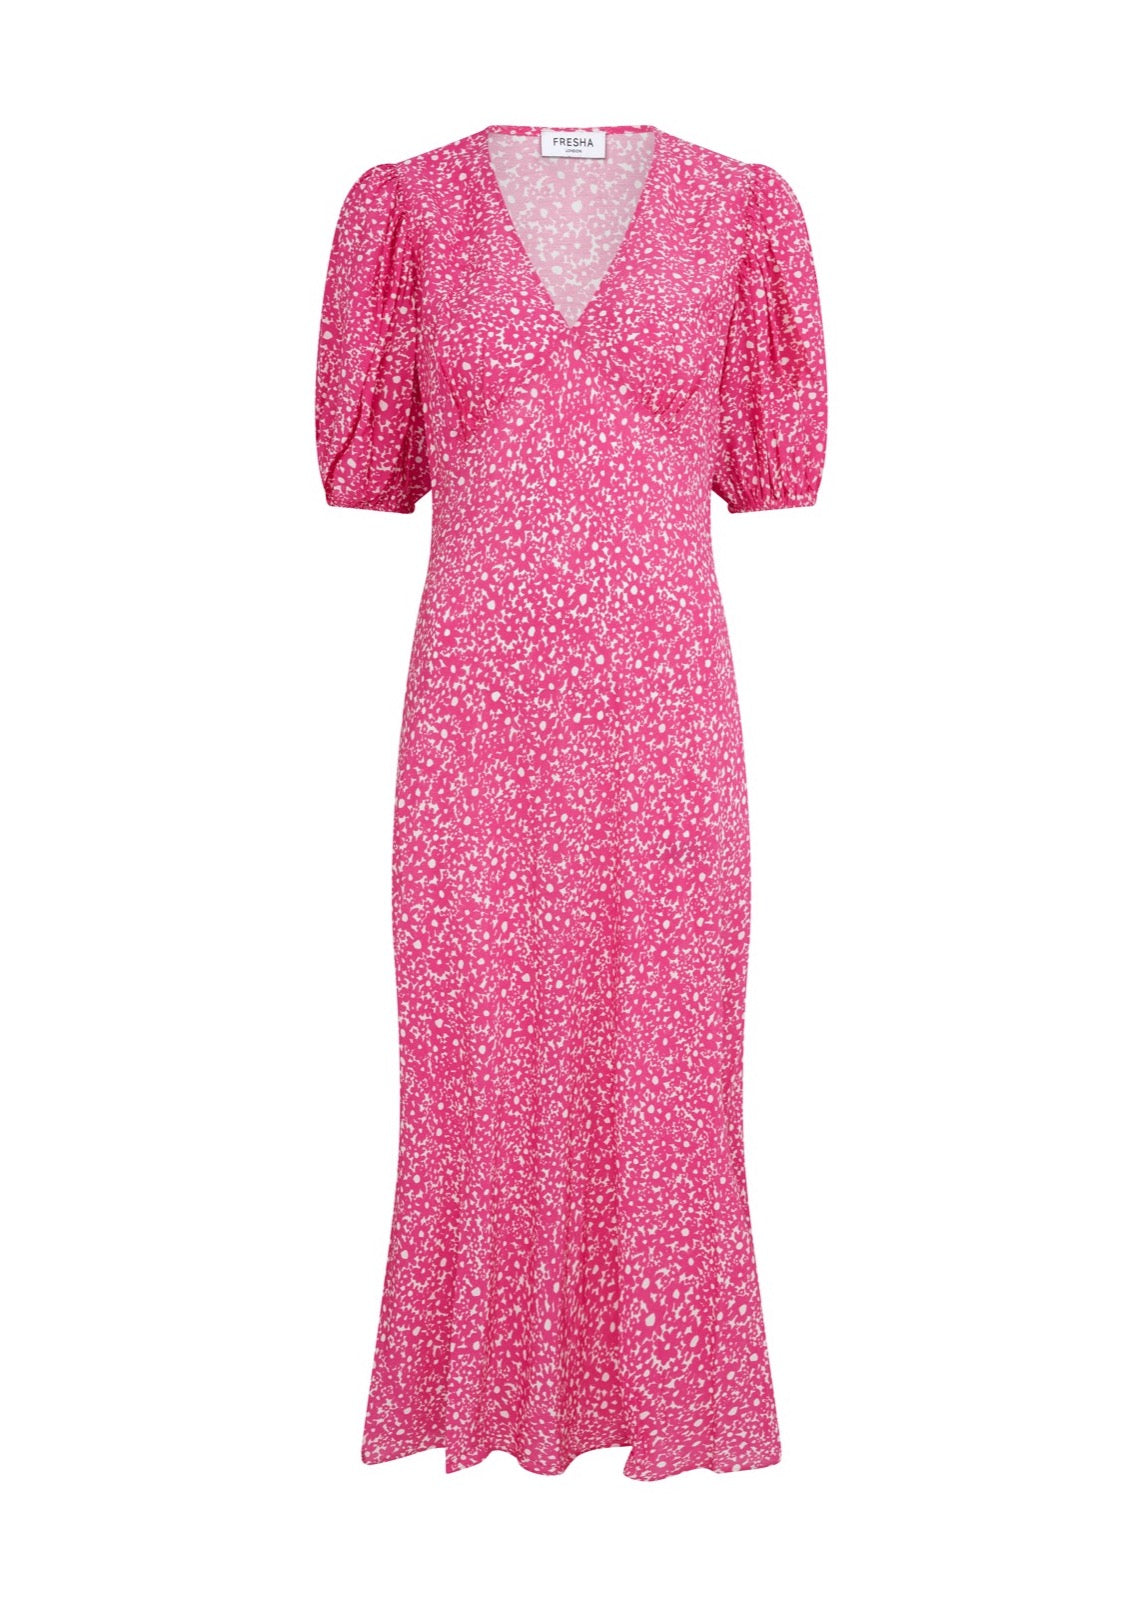 Fresha London Women's Pink / Purple Sienna Dress Pink Daisy